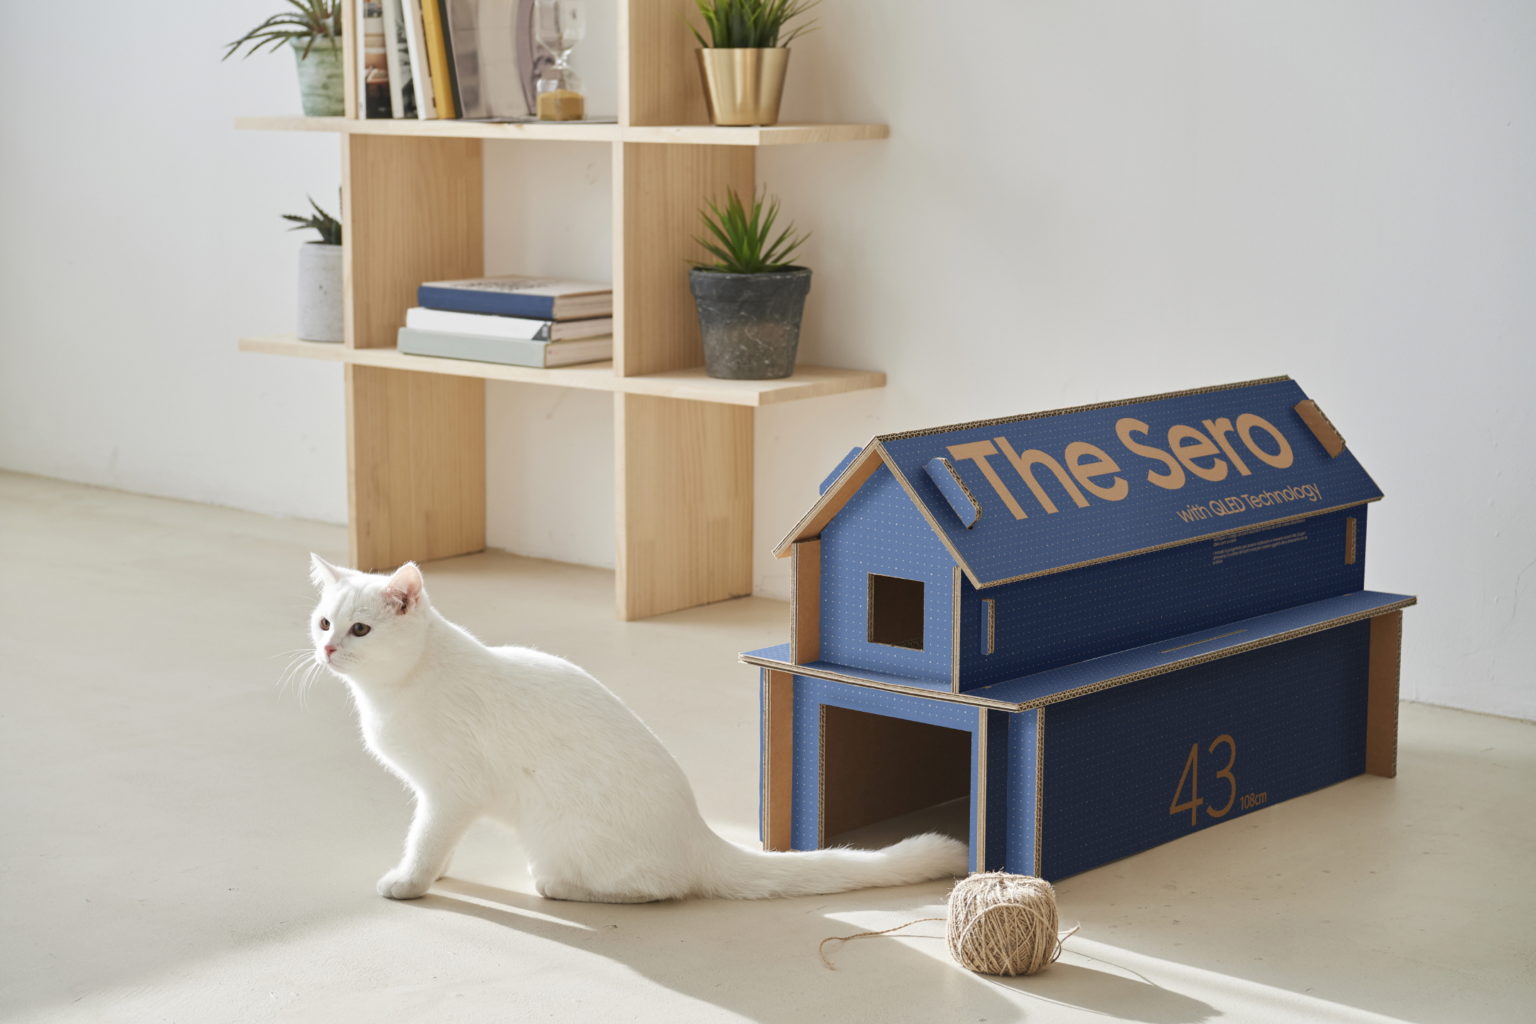 Samsung-TV-box-cat-house